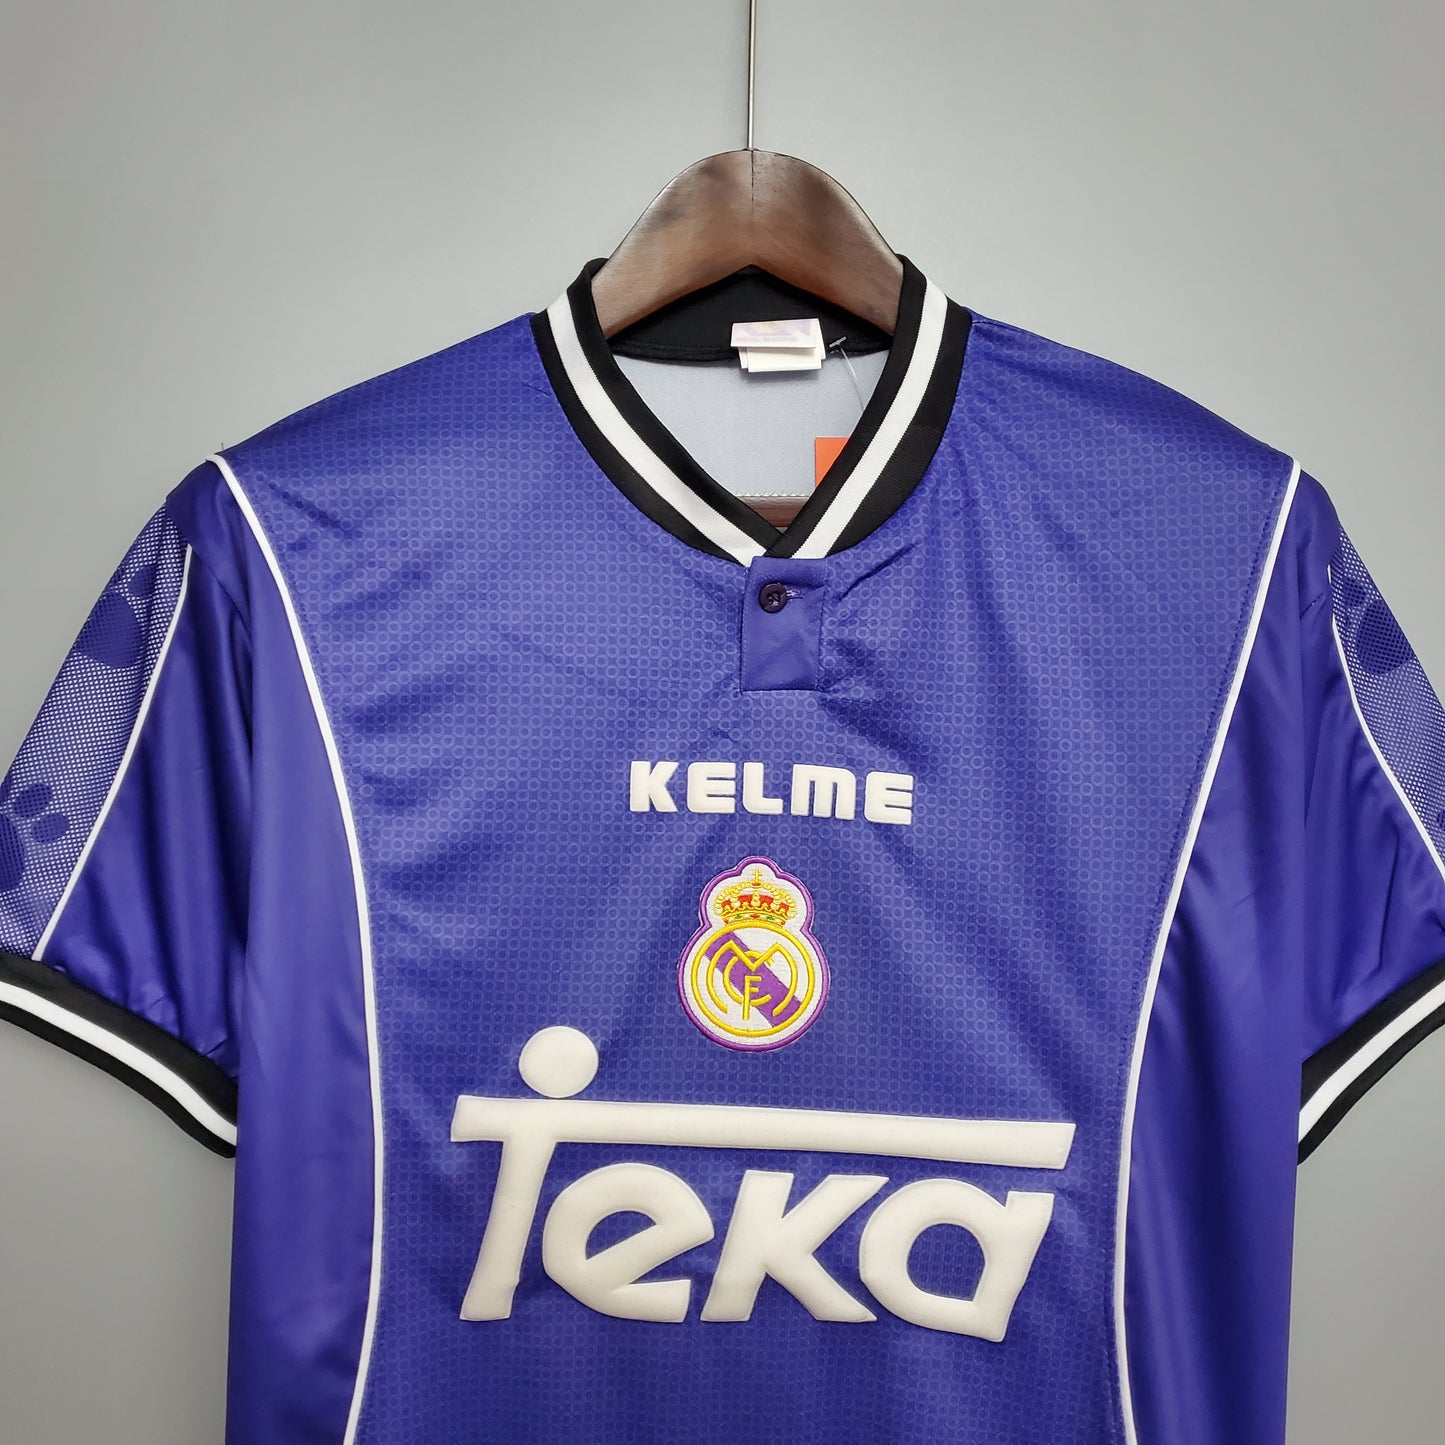 1997/98 Real Madrid Away Shirt